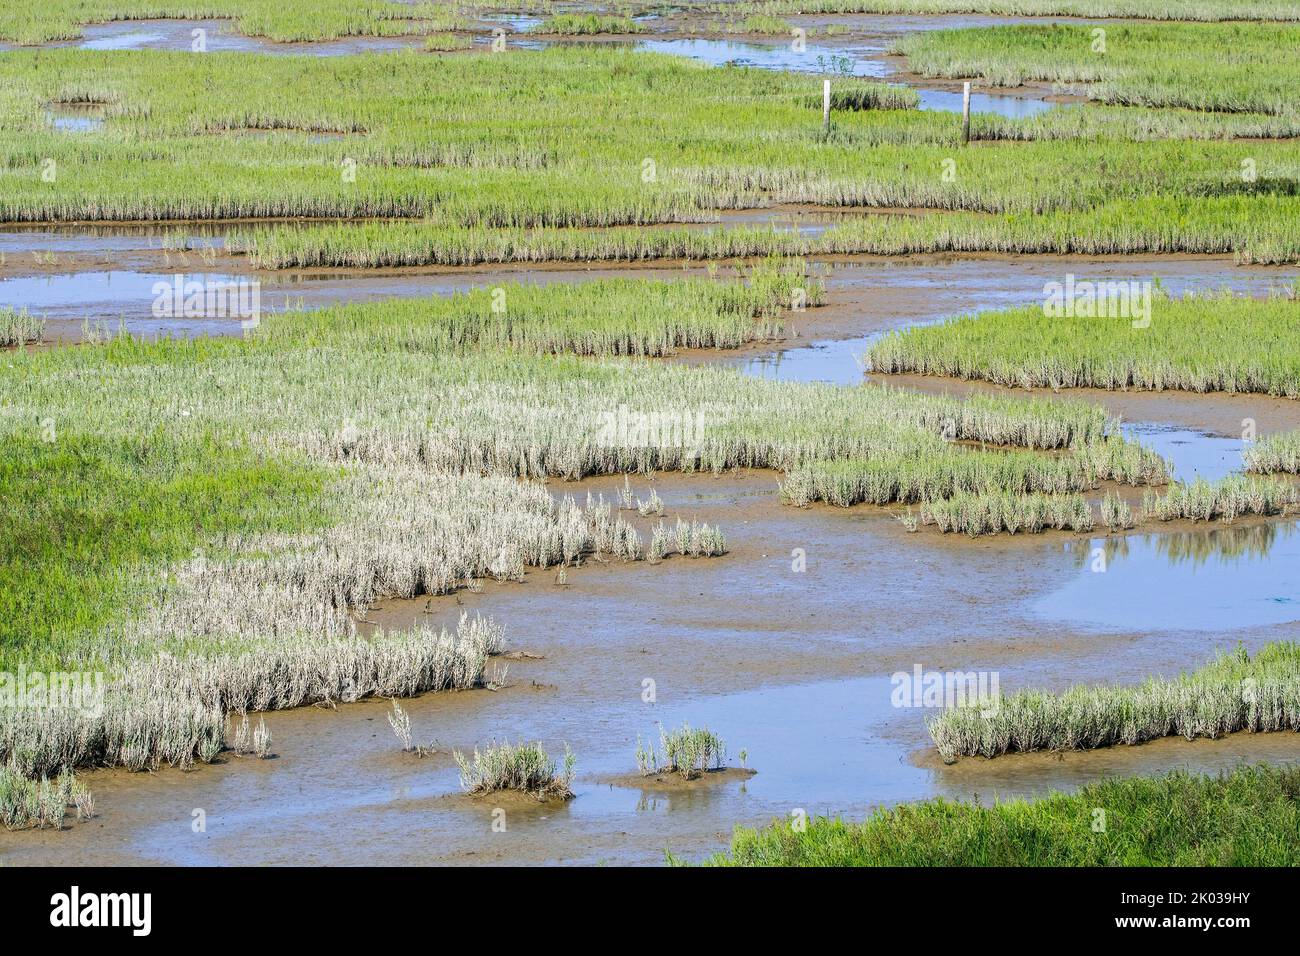 Common glasswort / marsh samphire (Salicornia europaea) growing in intertidal salt marsh / saltmarsh, Zwin plain in late summer, Knokke-Heist, Belgium Stock Photo